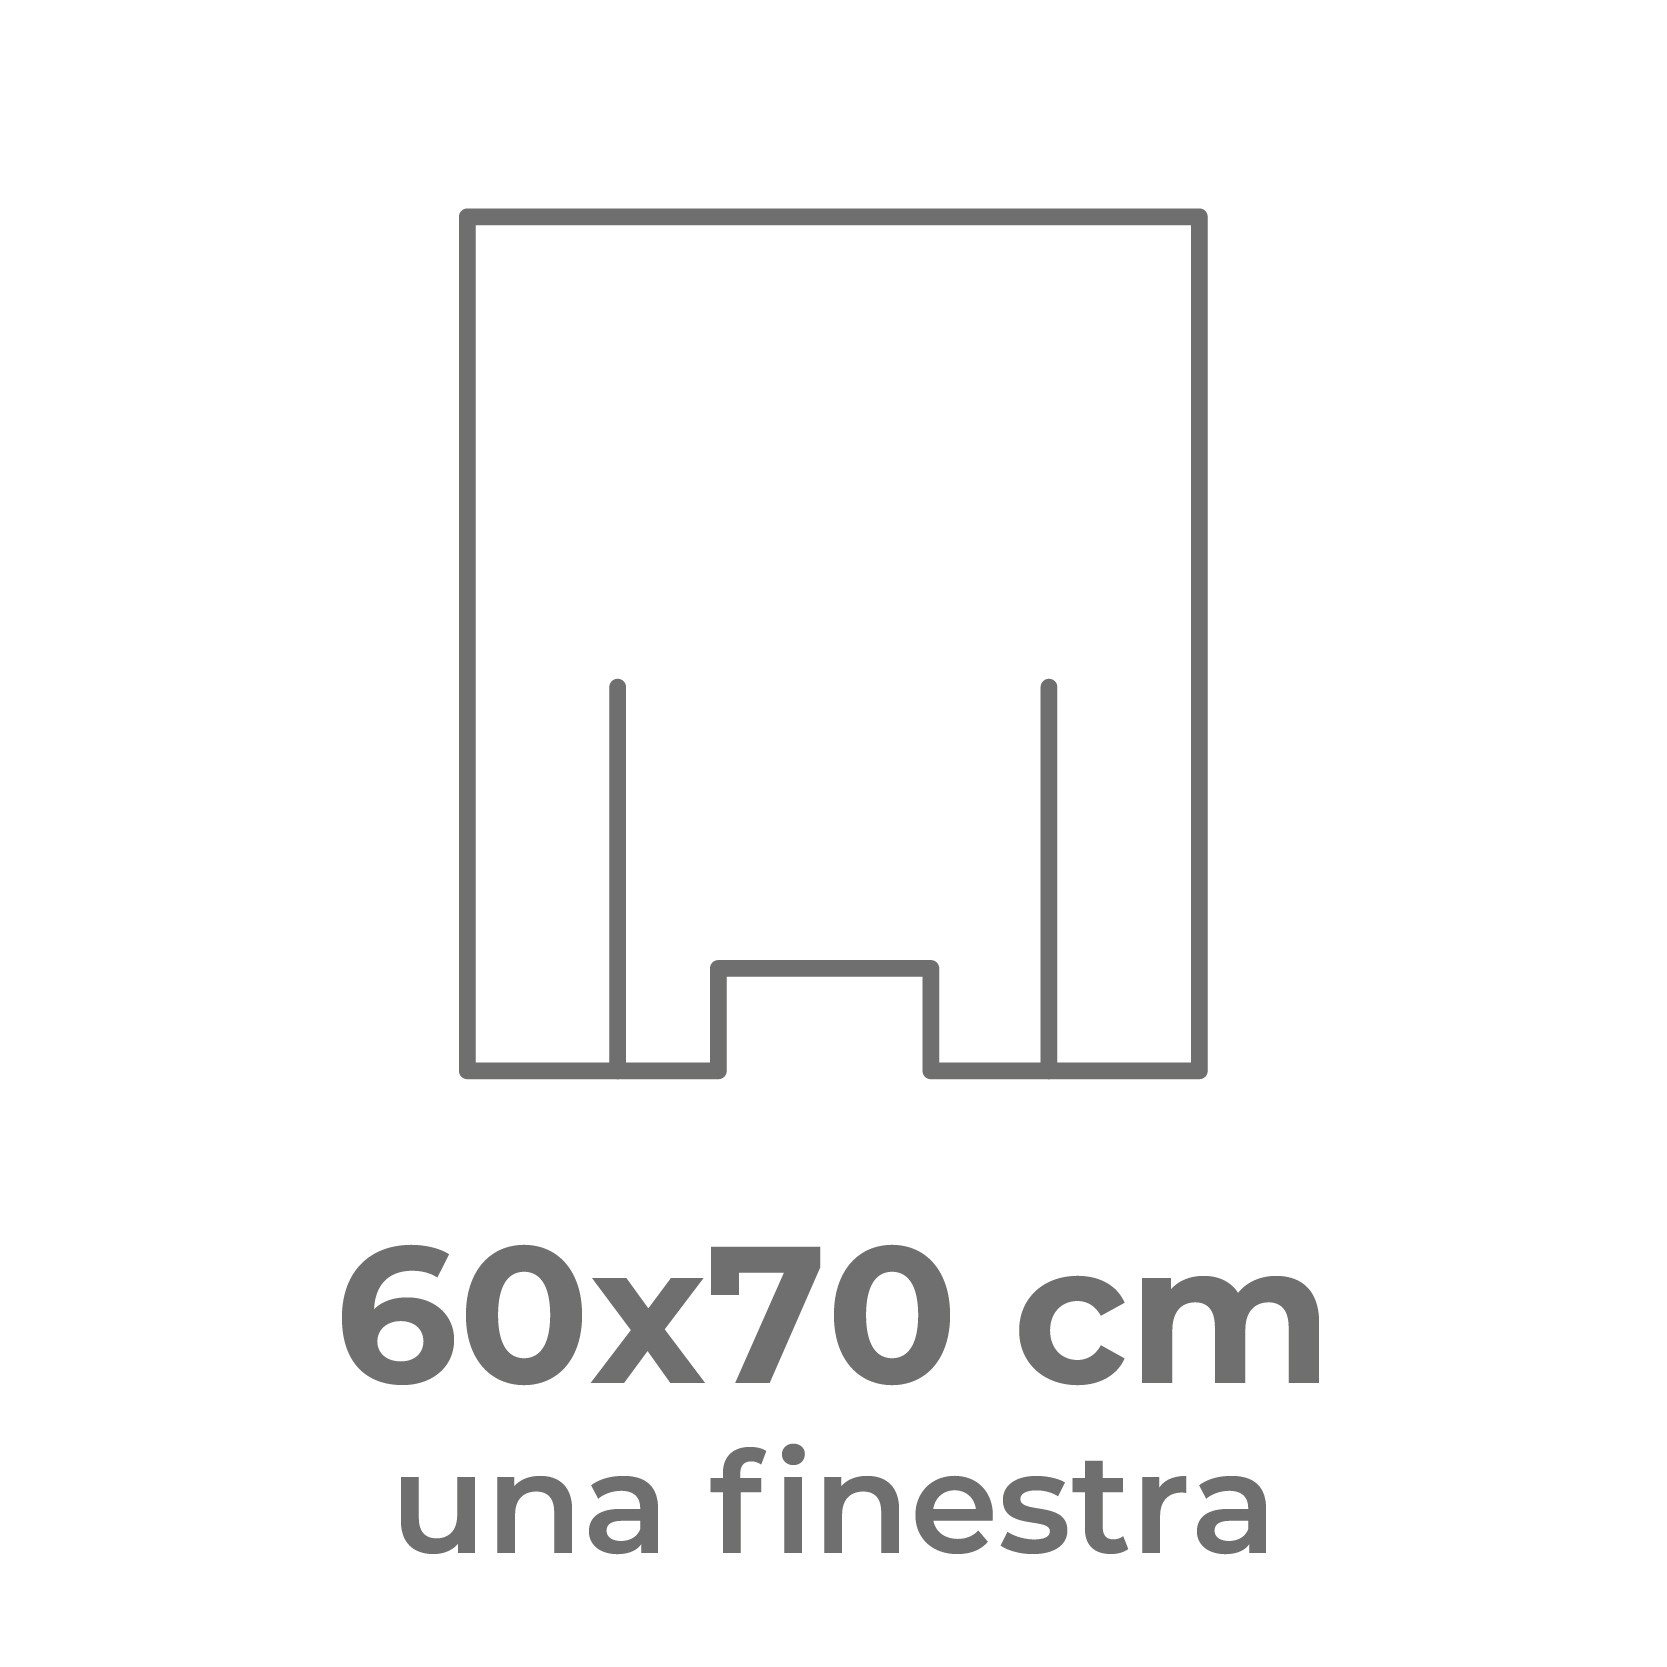 60x70 cm (uso singolo)